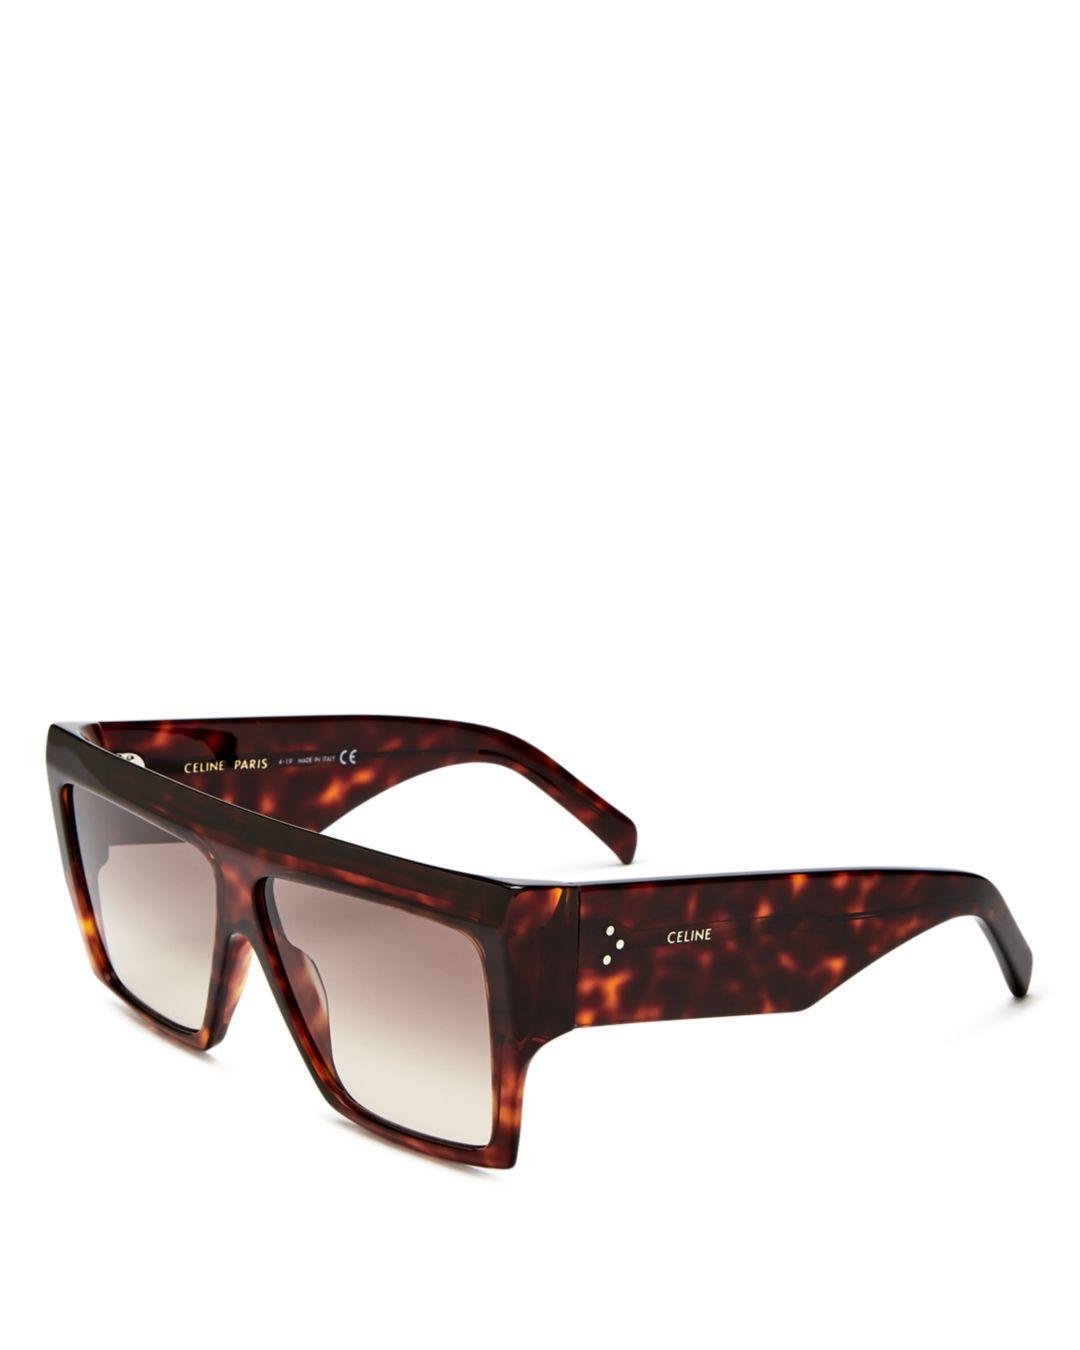 Celine Unisex Square Sunglasses in Brown - Lyst